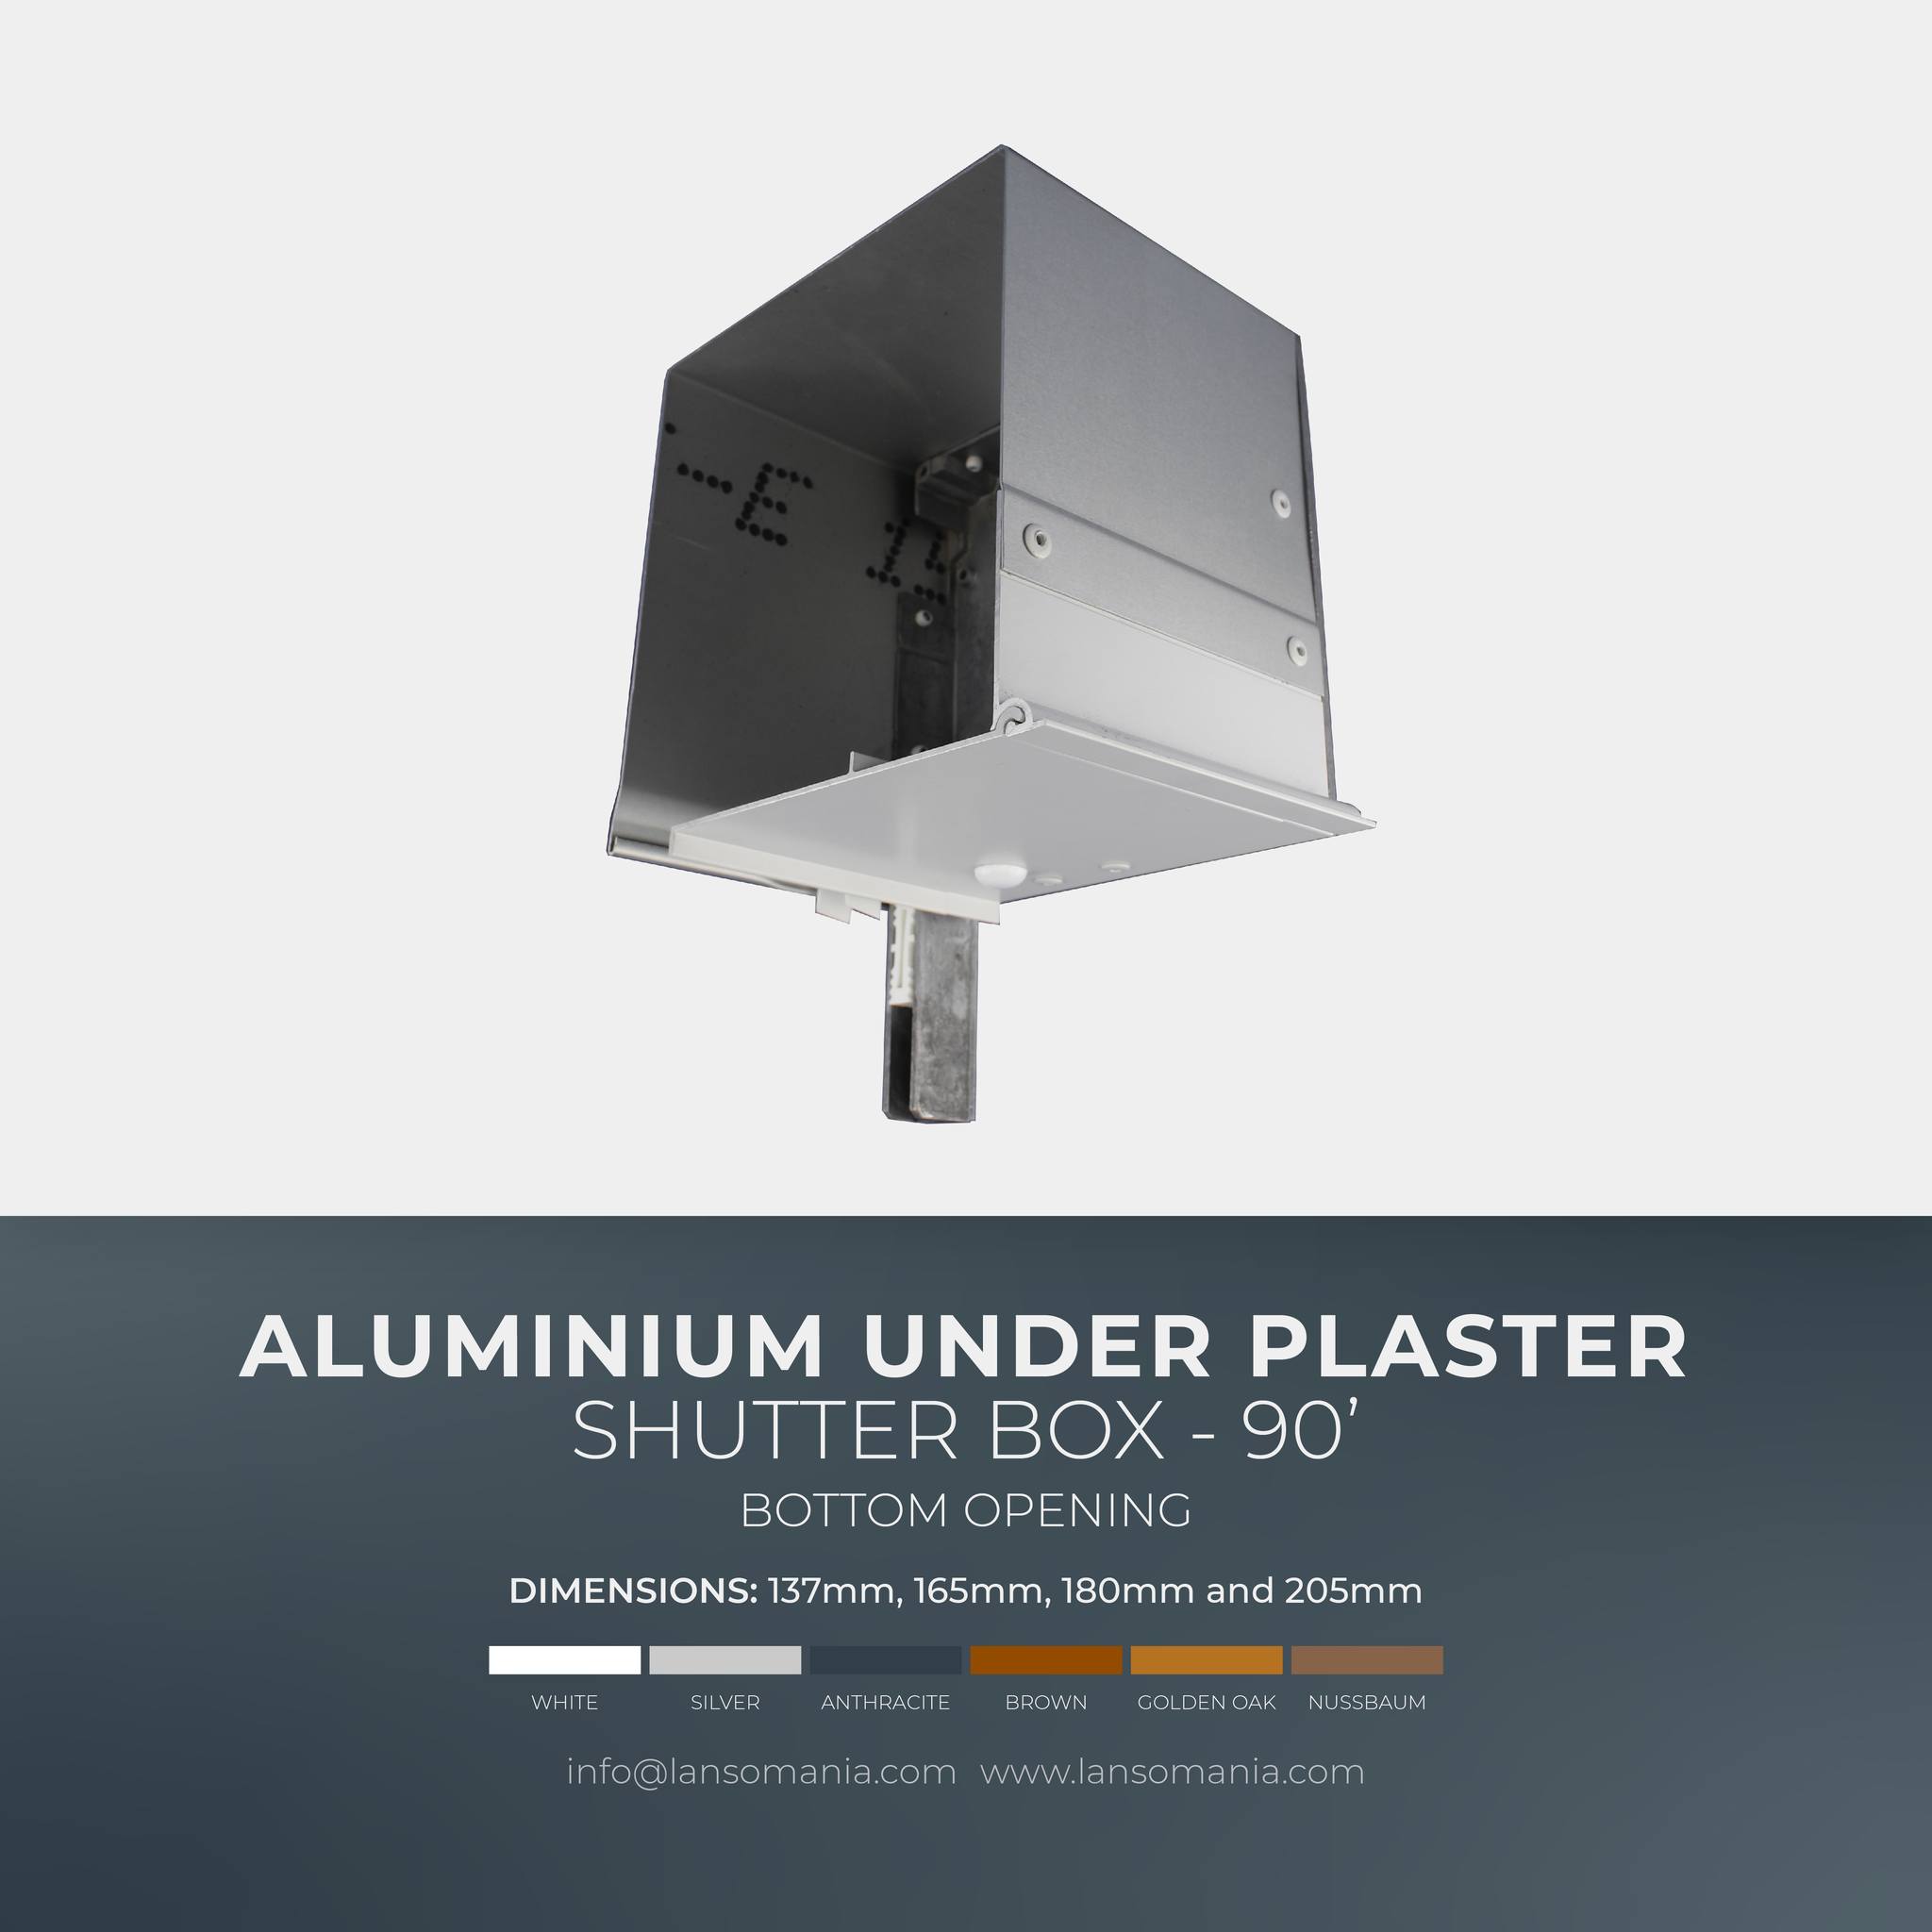 Aluminium under plaster shutter boxes – 90′